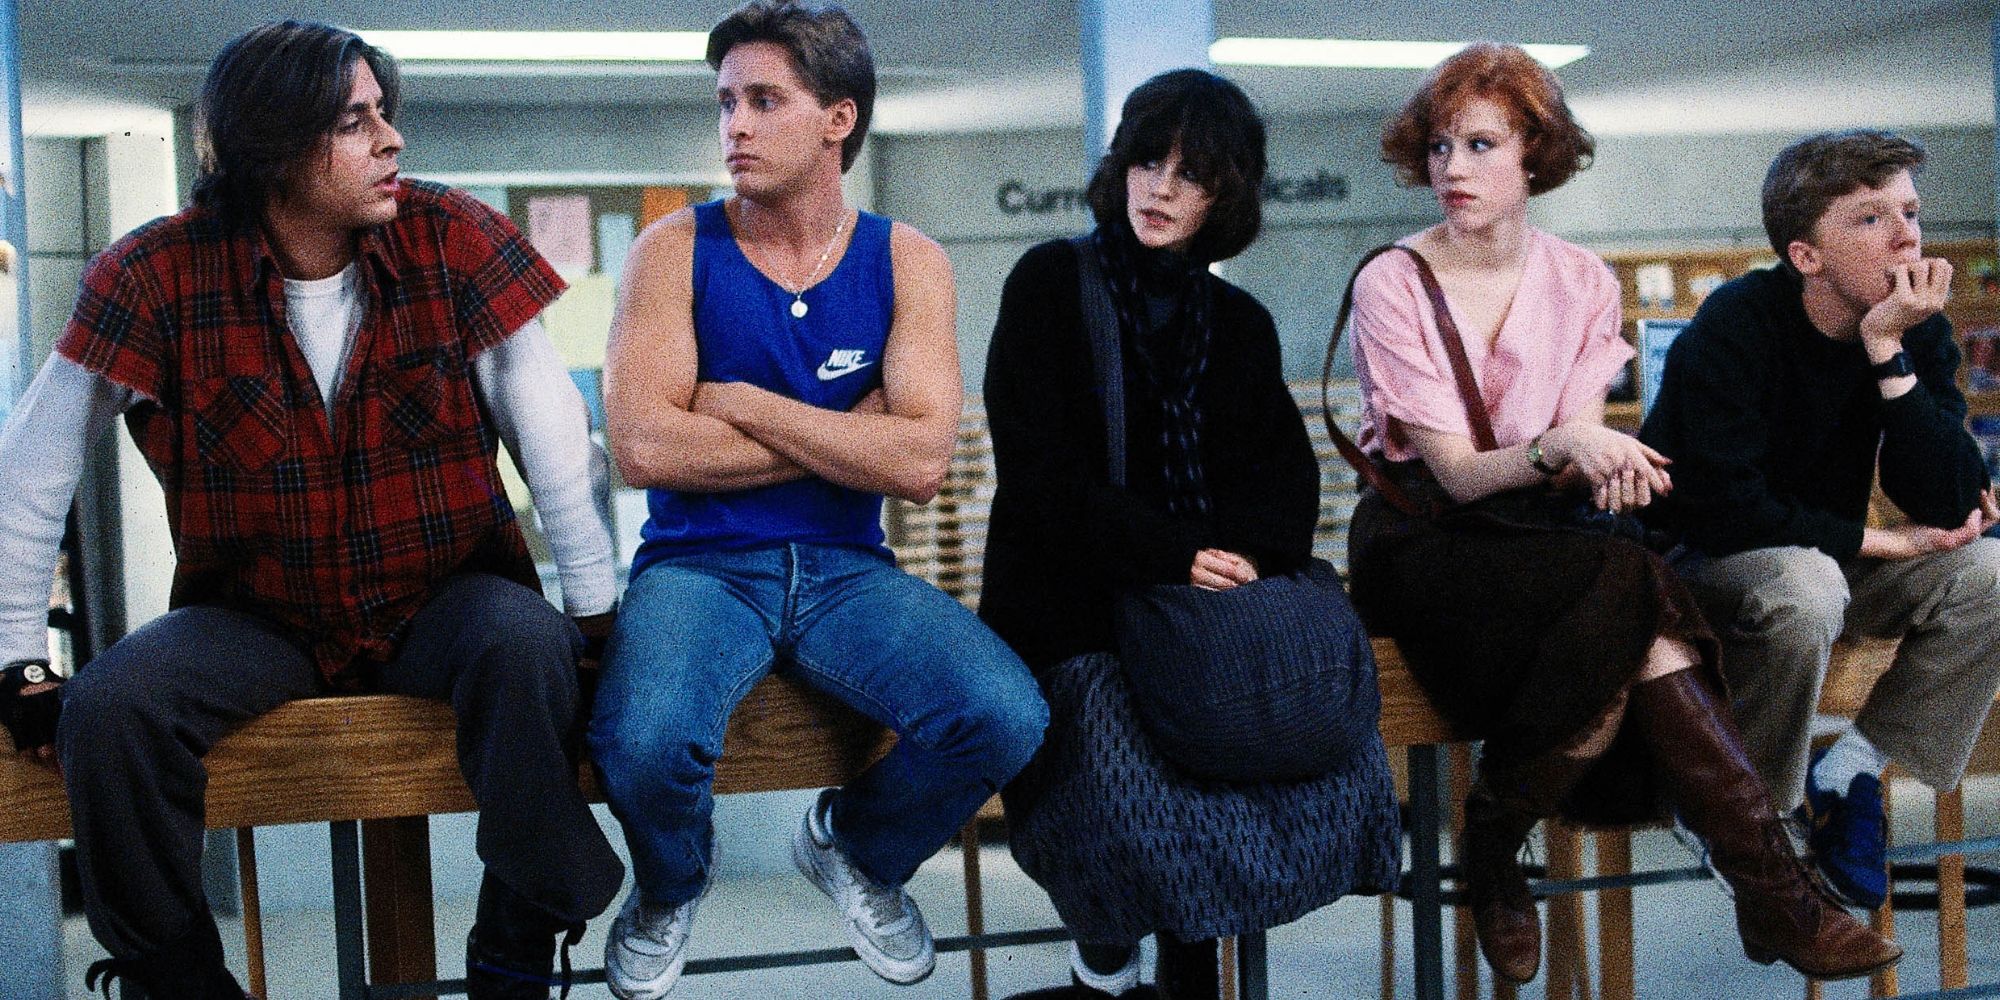 The breakfast club sitting down in 'The Breakfast Club' (1985)